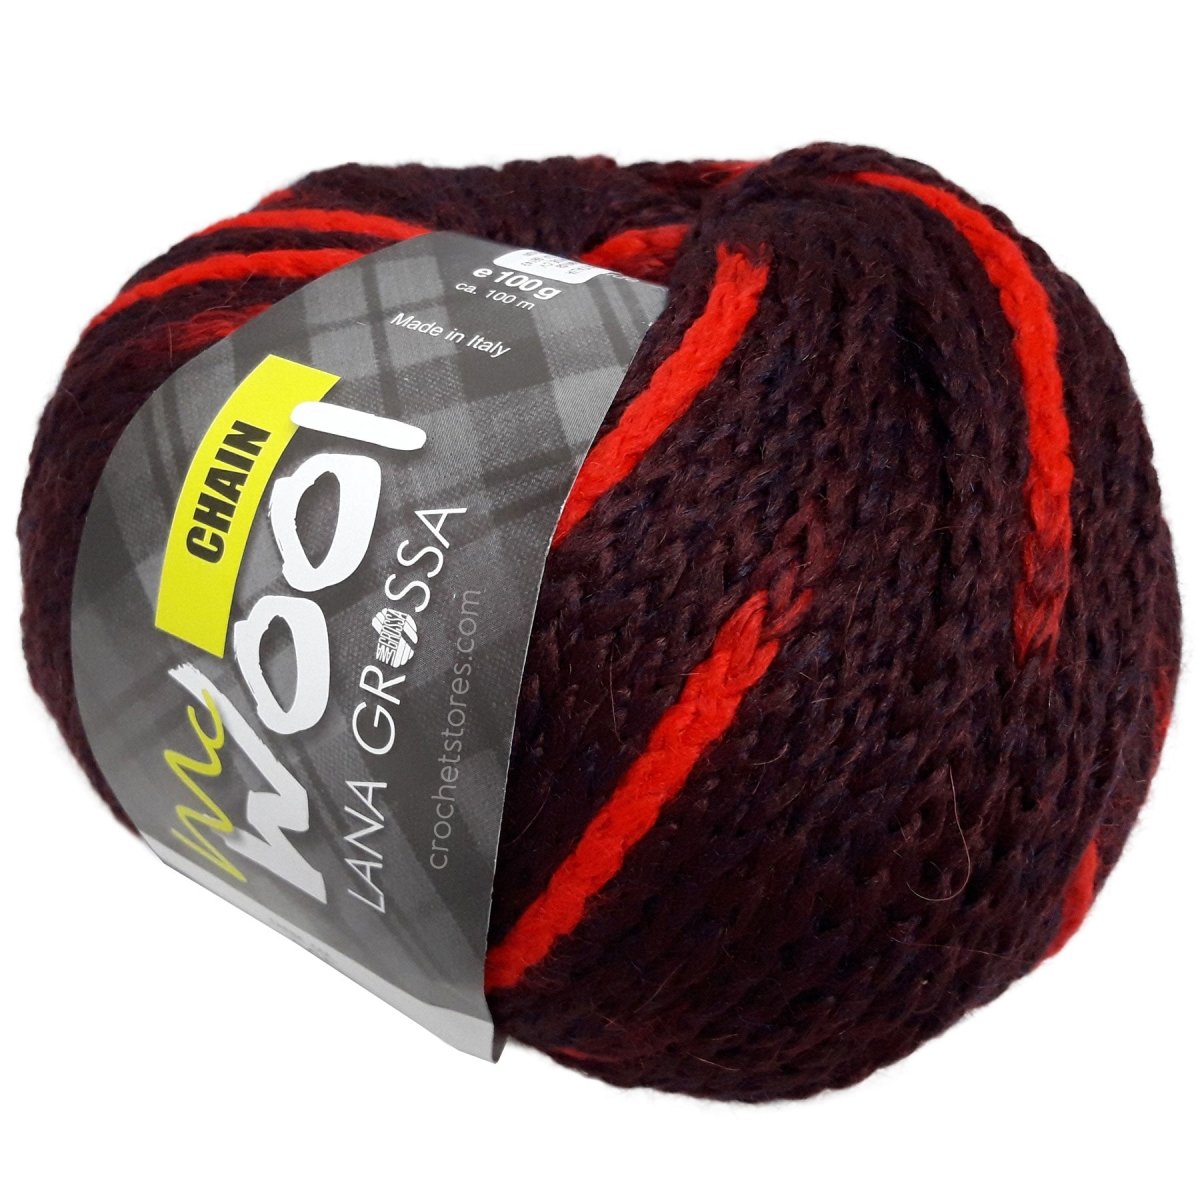 CHAIN - Crochetstores266-00054033493144261